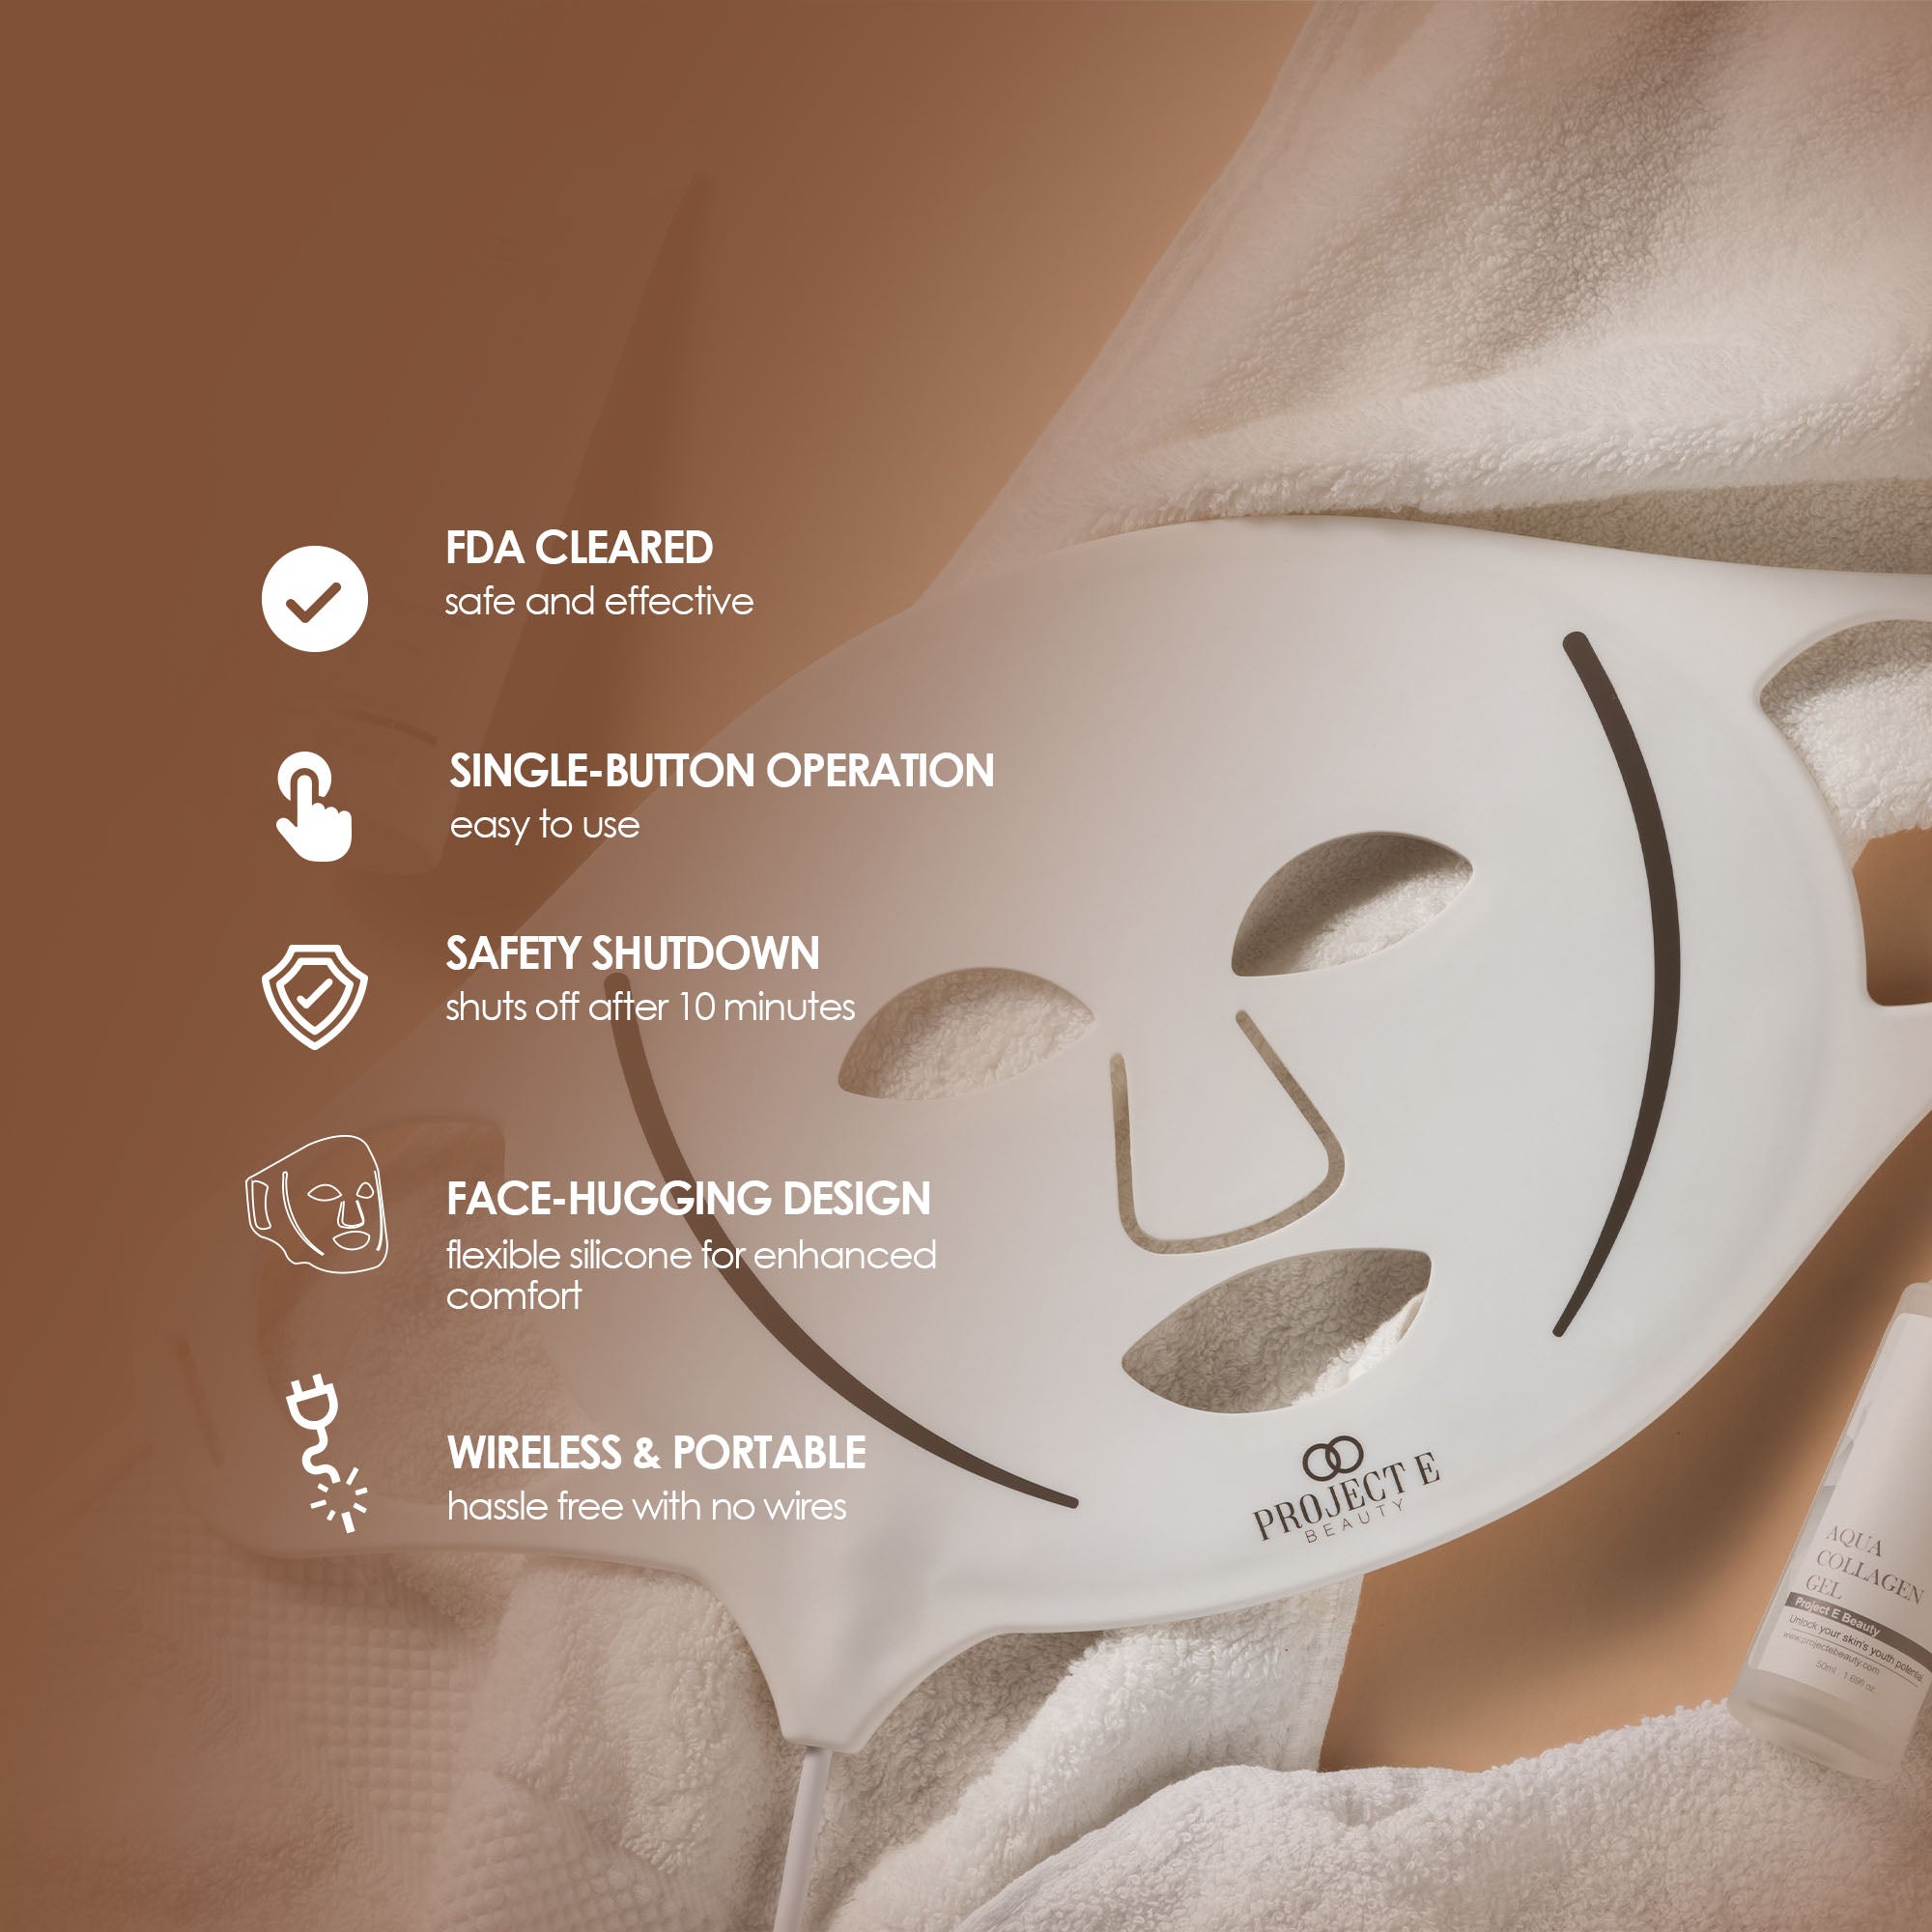 LightAura Flex | LED Face Mask - Project E Beauty